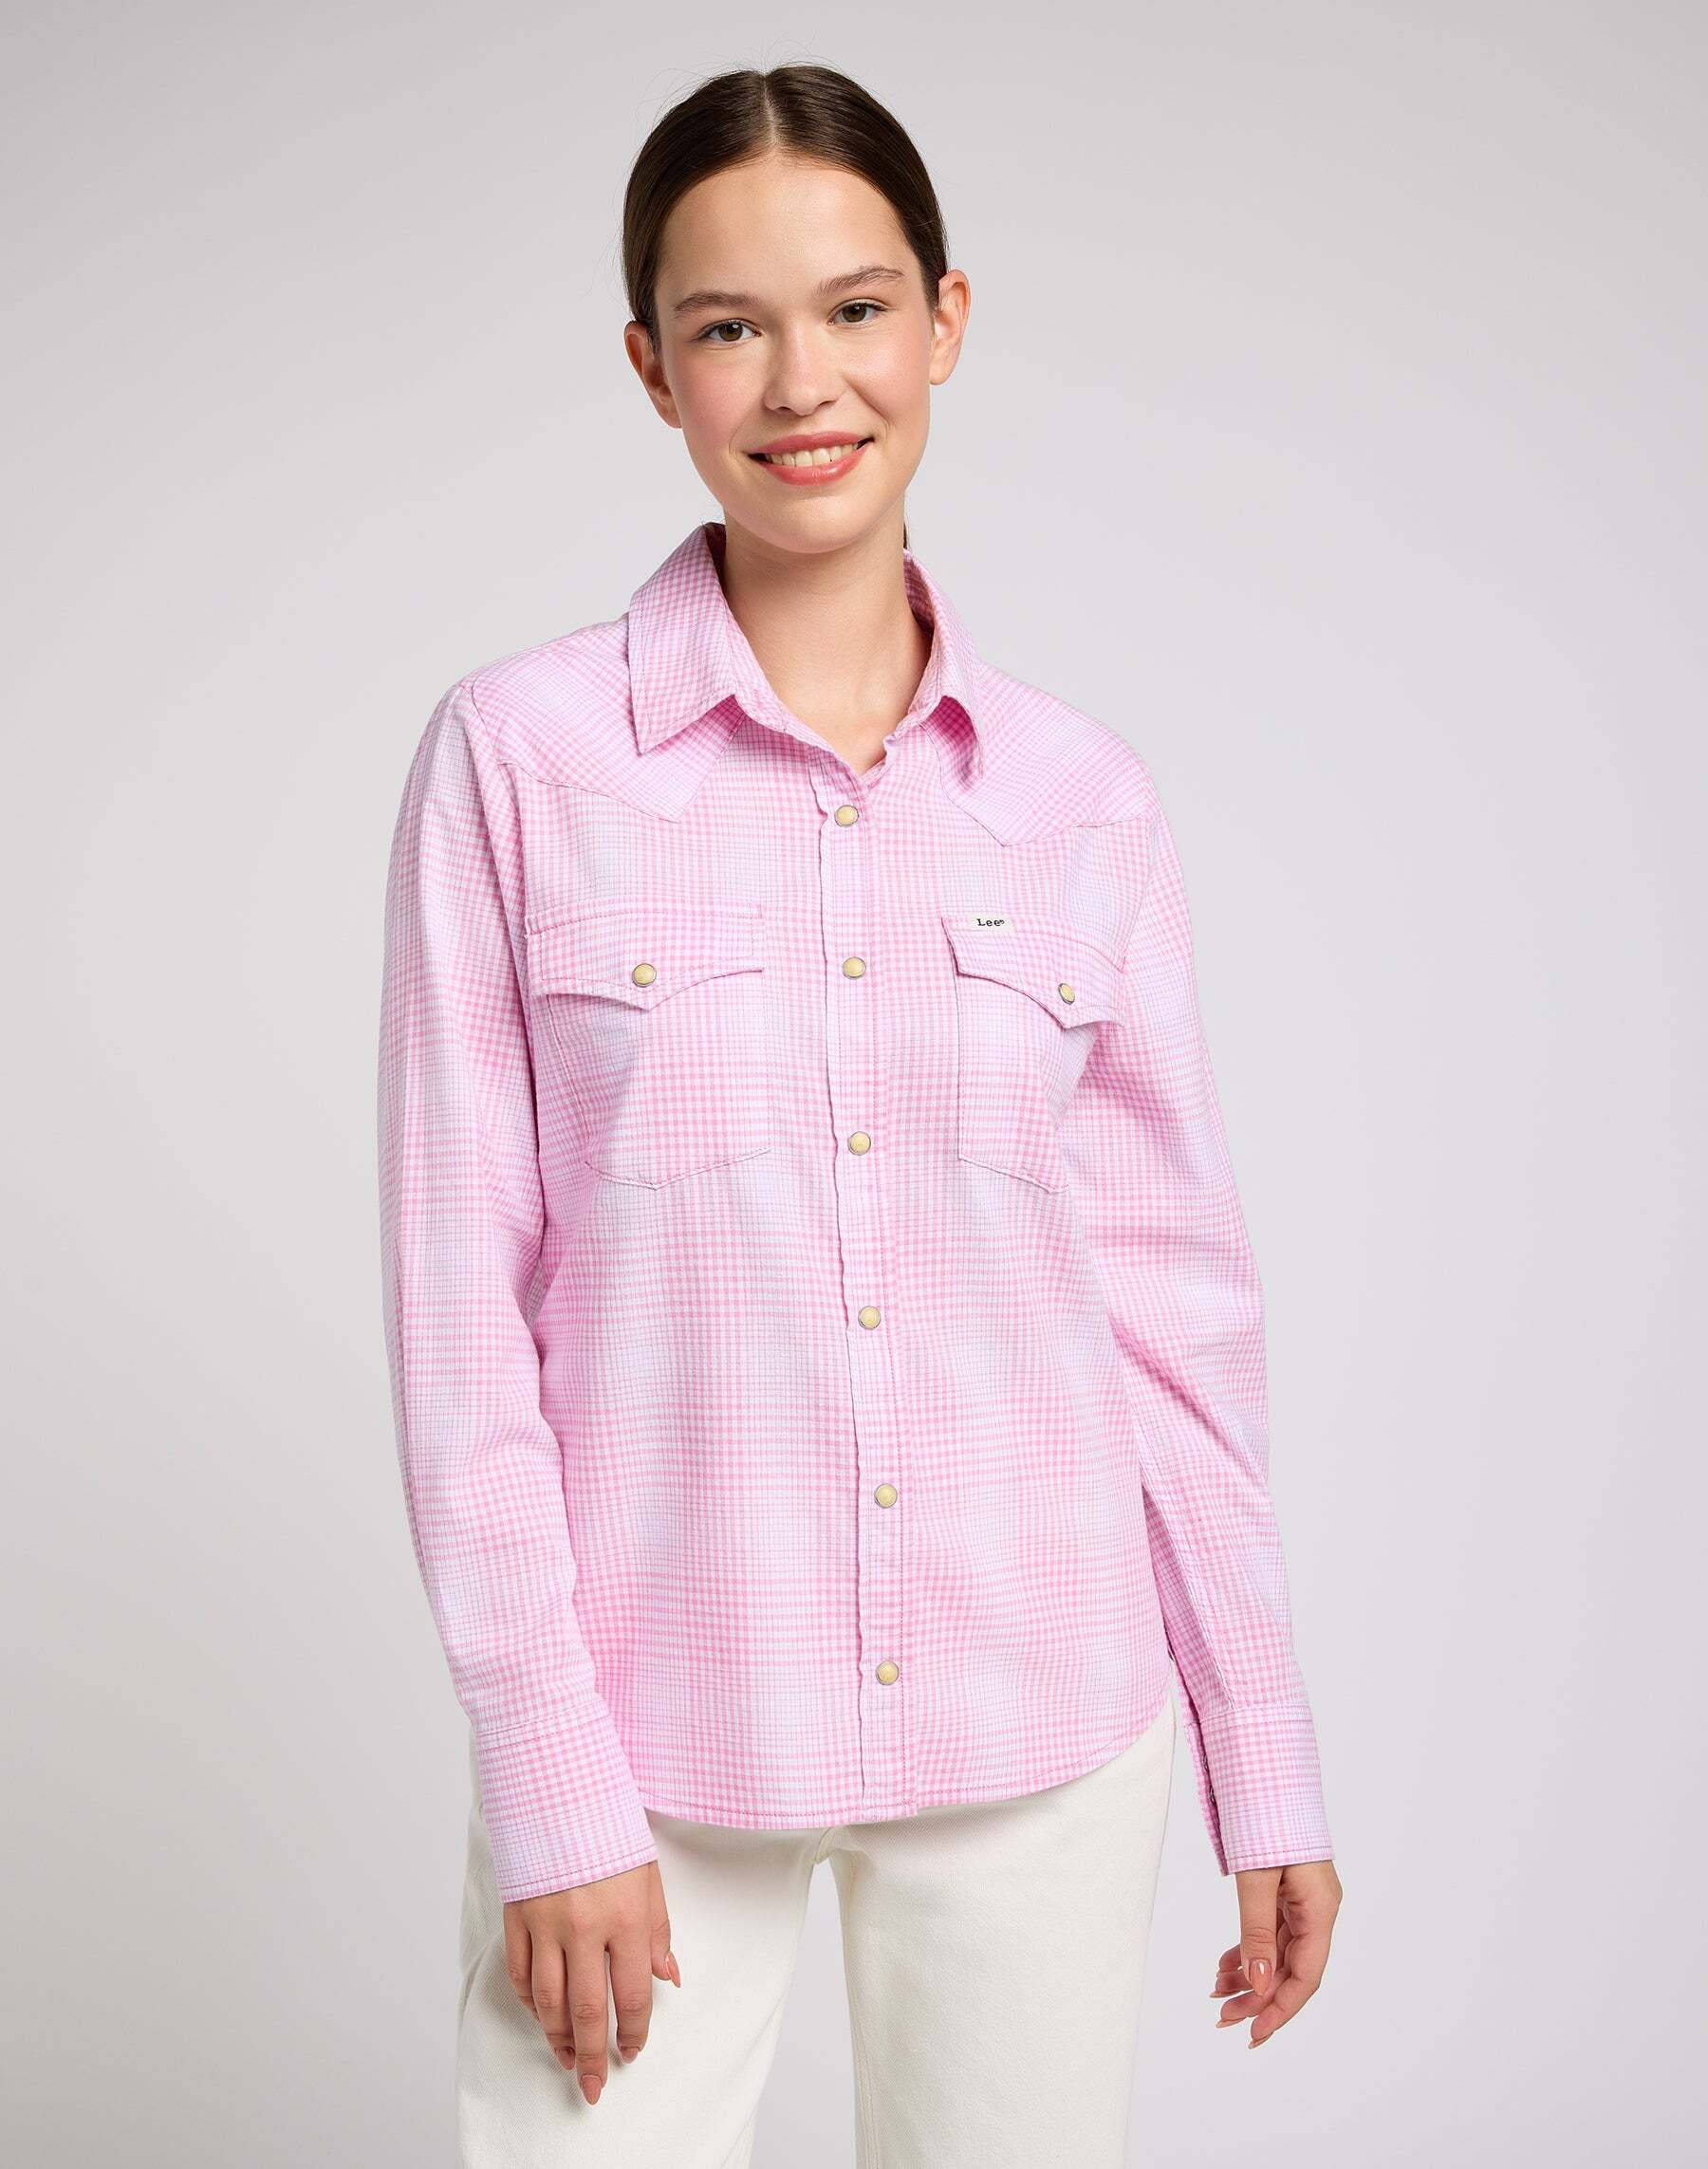 Lee® Langarmbluse »LEE Hemden Regular Western Shirt«